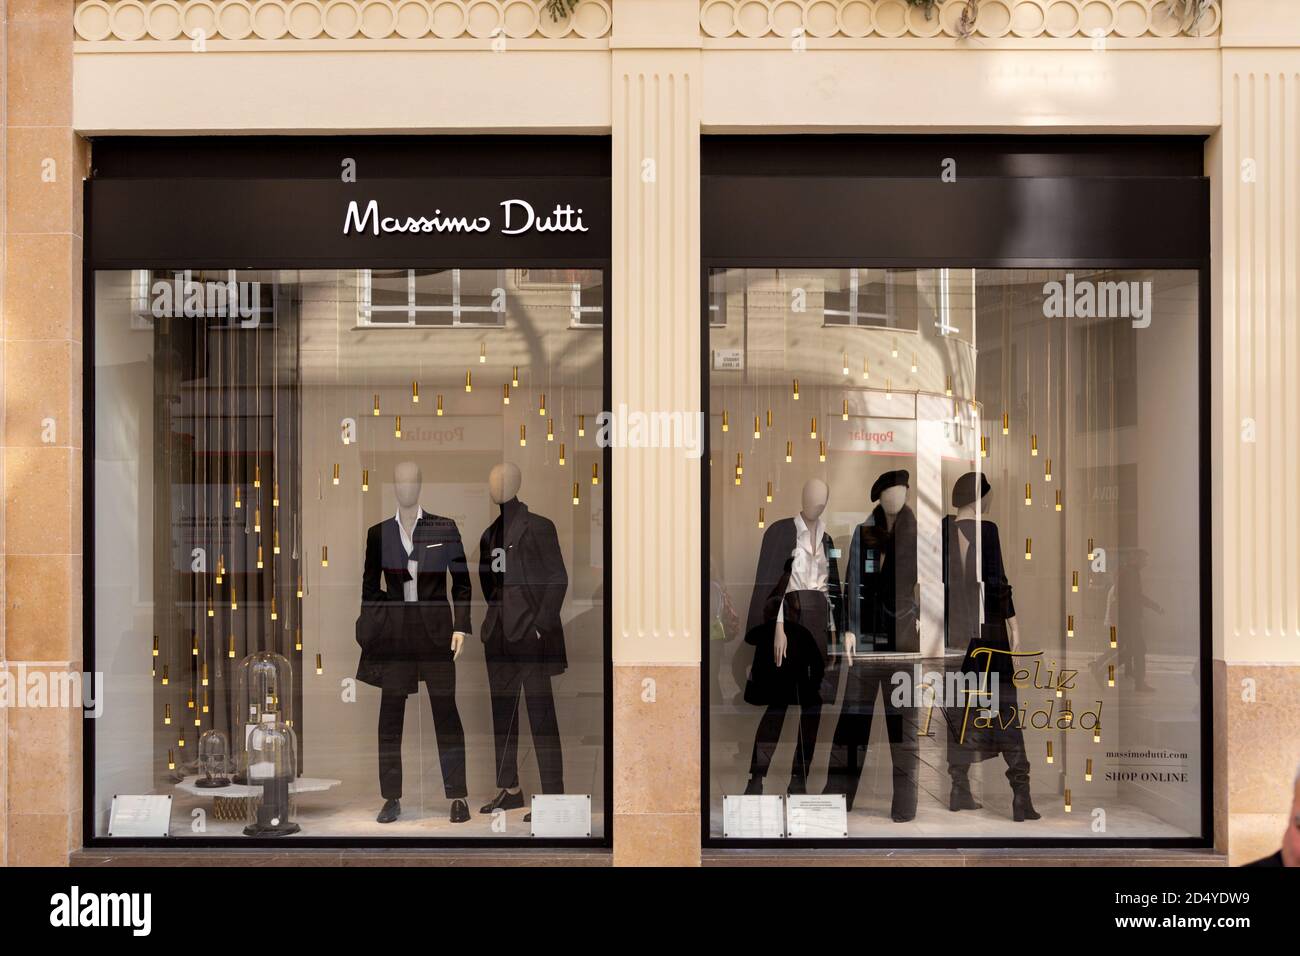 Massimo Dutti display window. Massimo Dutti fashion boutique store front  Stock Photo - Alamy